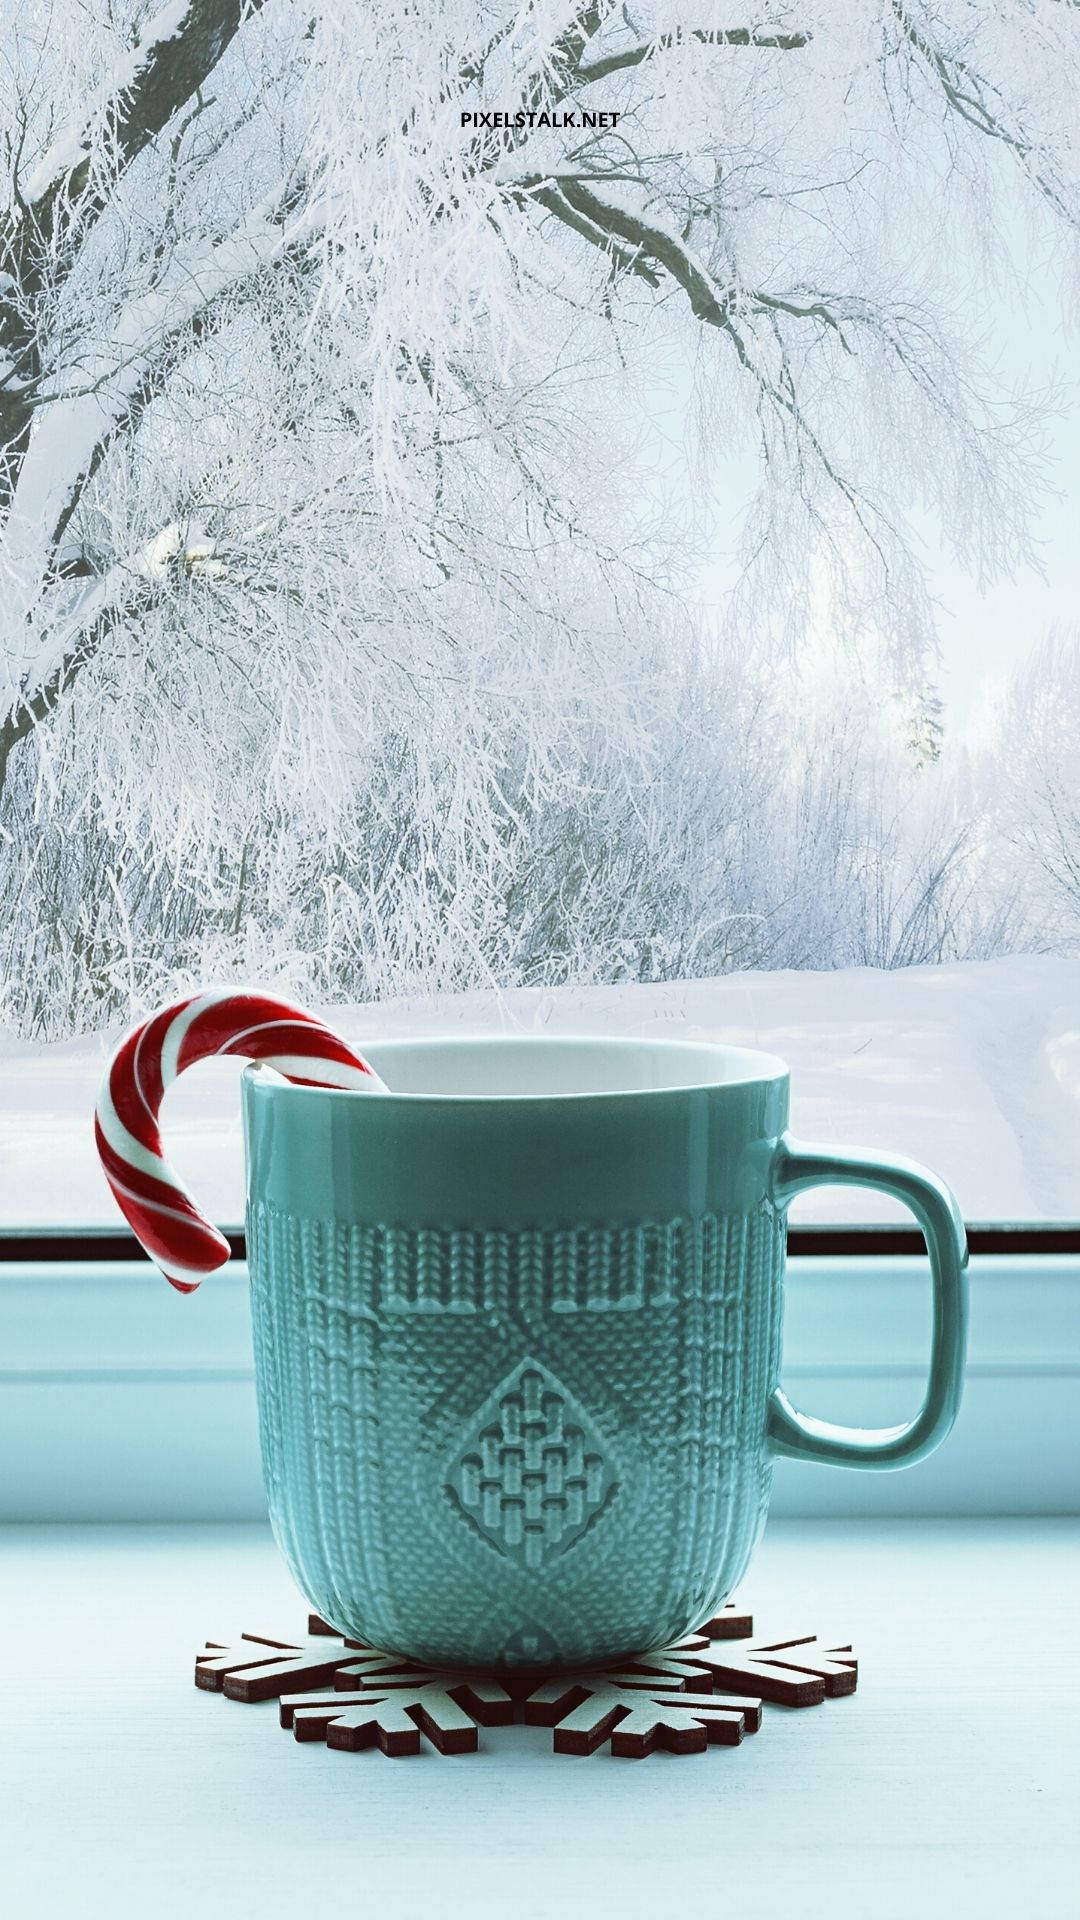 Green Mug Candy Cane Winter iPhone Wallpaper